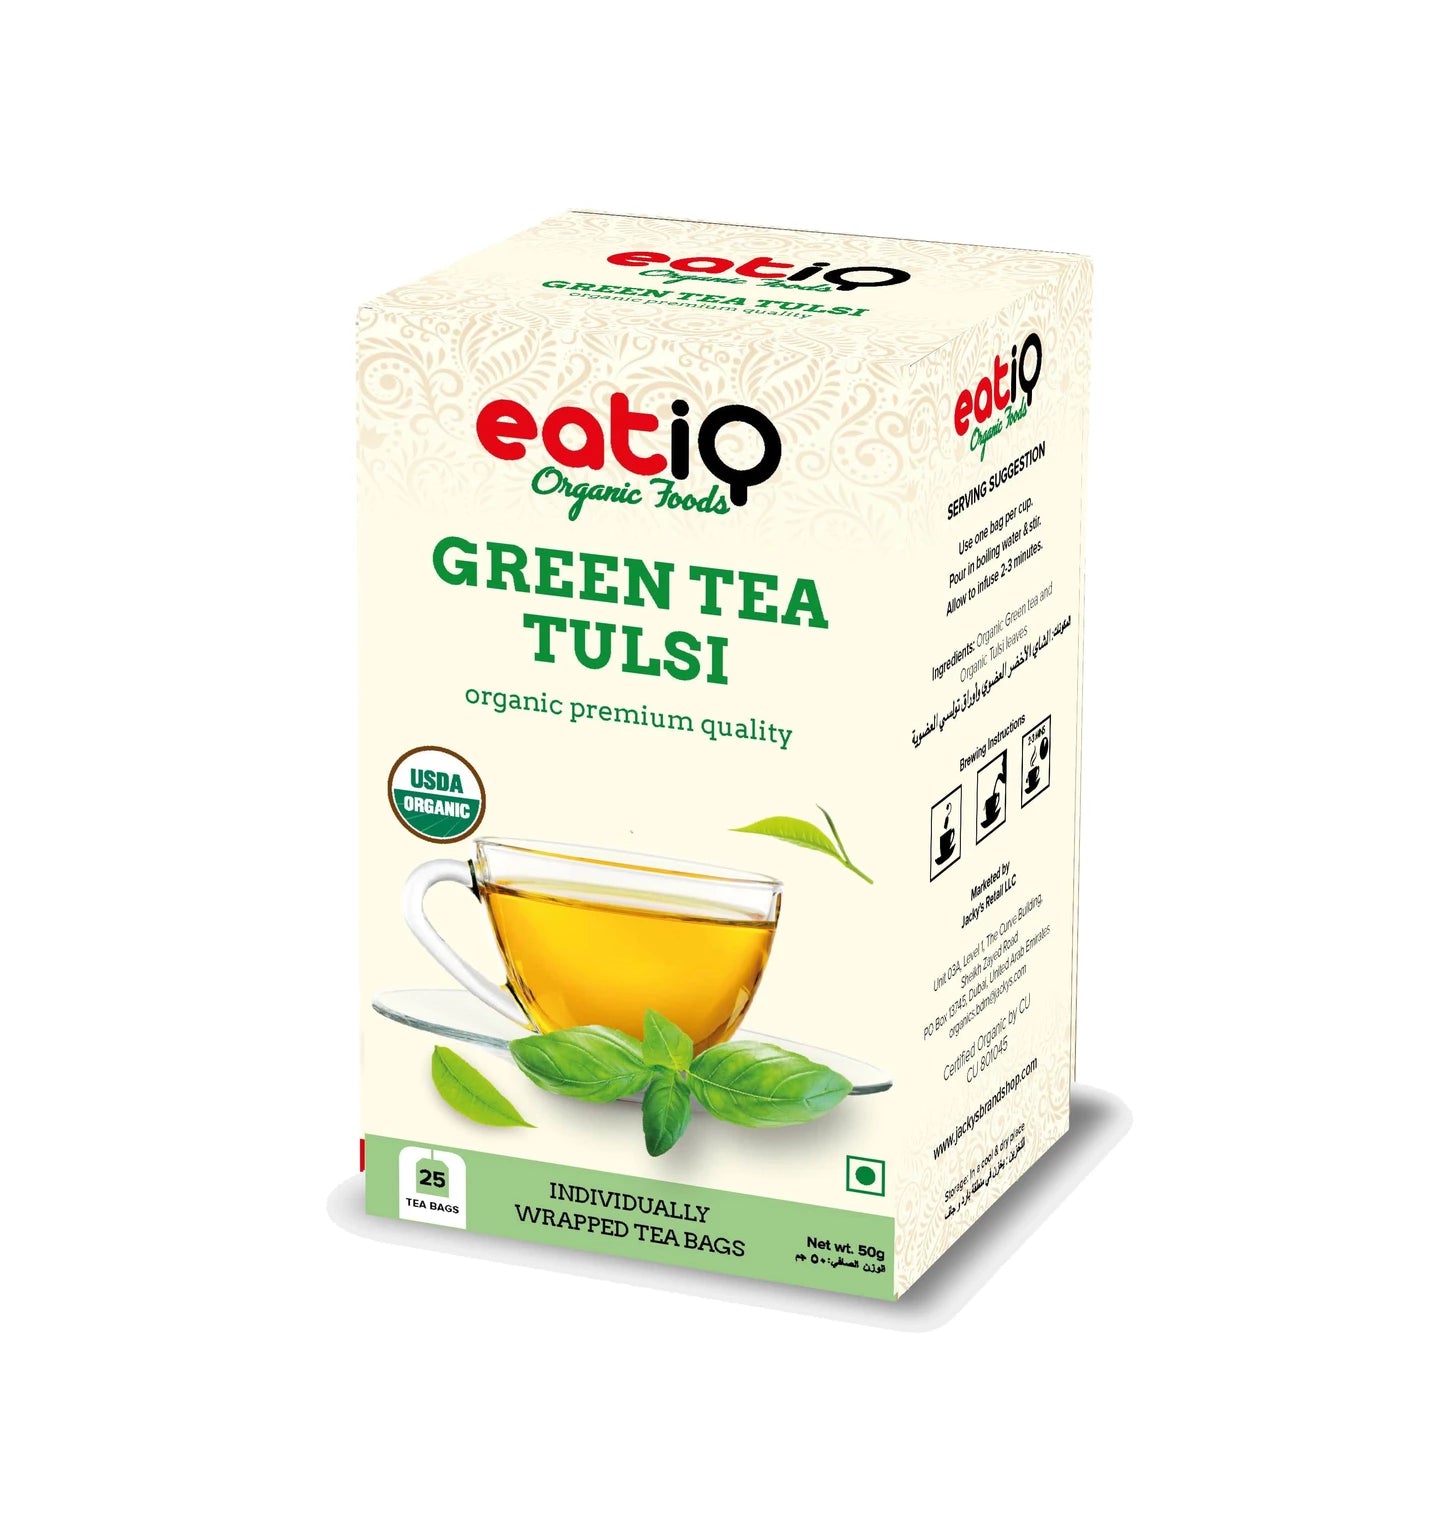 EATIQ ORGANIC FOODS Green Tea Tulsi, 50g